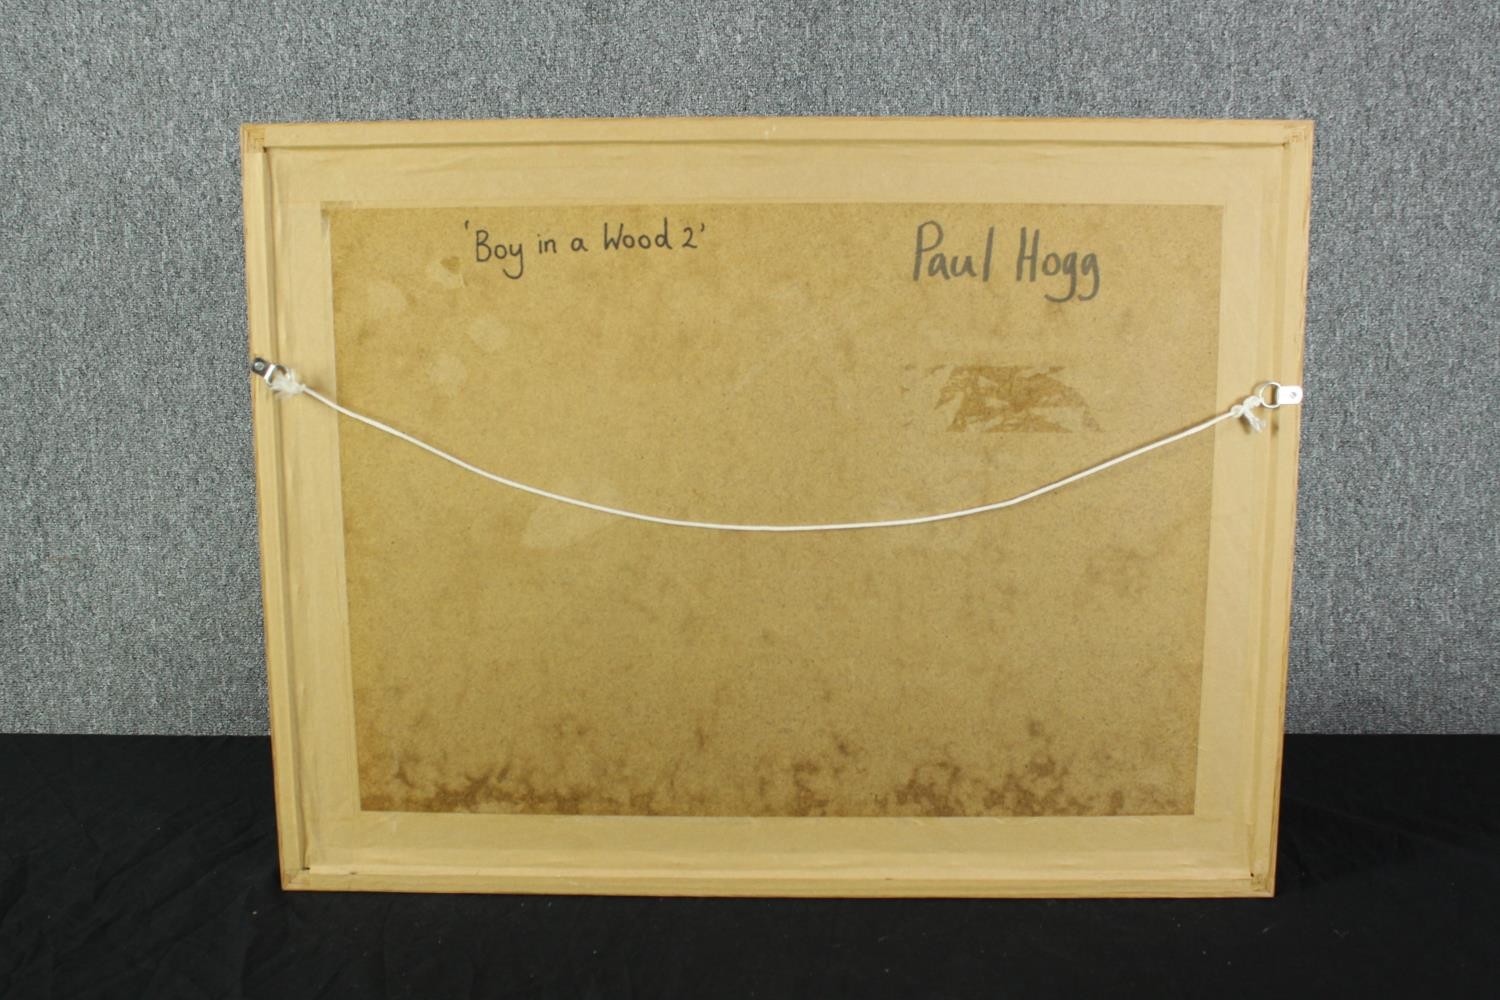 Paul Hogg (British). 'Boy in a wood II'. Woodcut. Framed and glazed. H.51 x W.67 cm. - Image 3 of 3